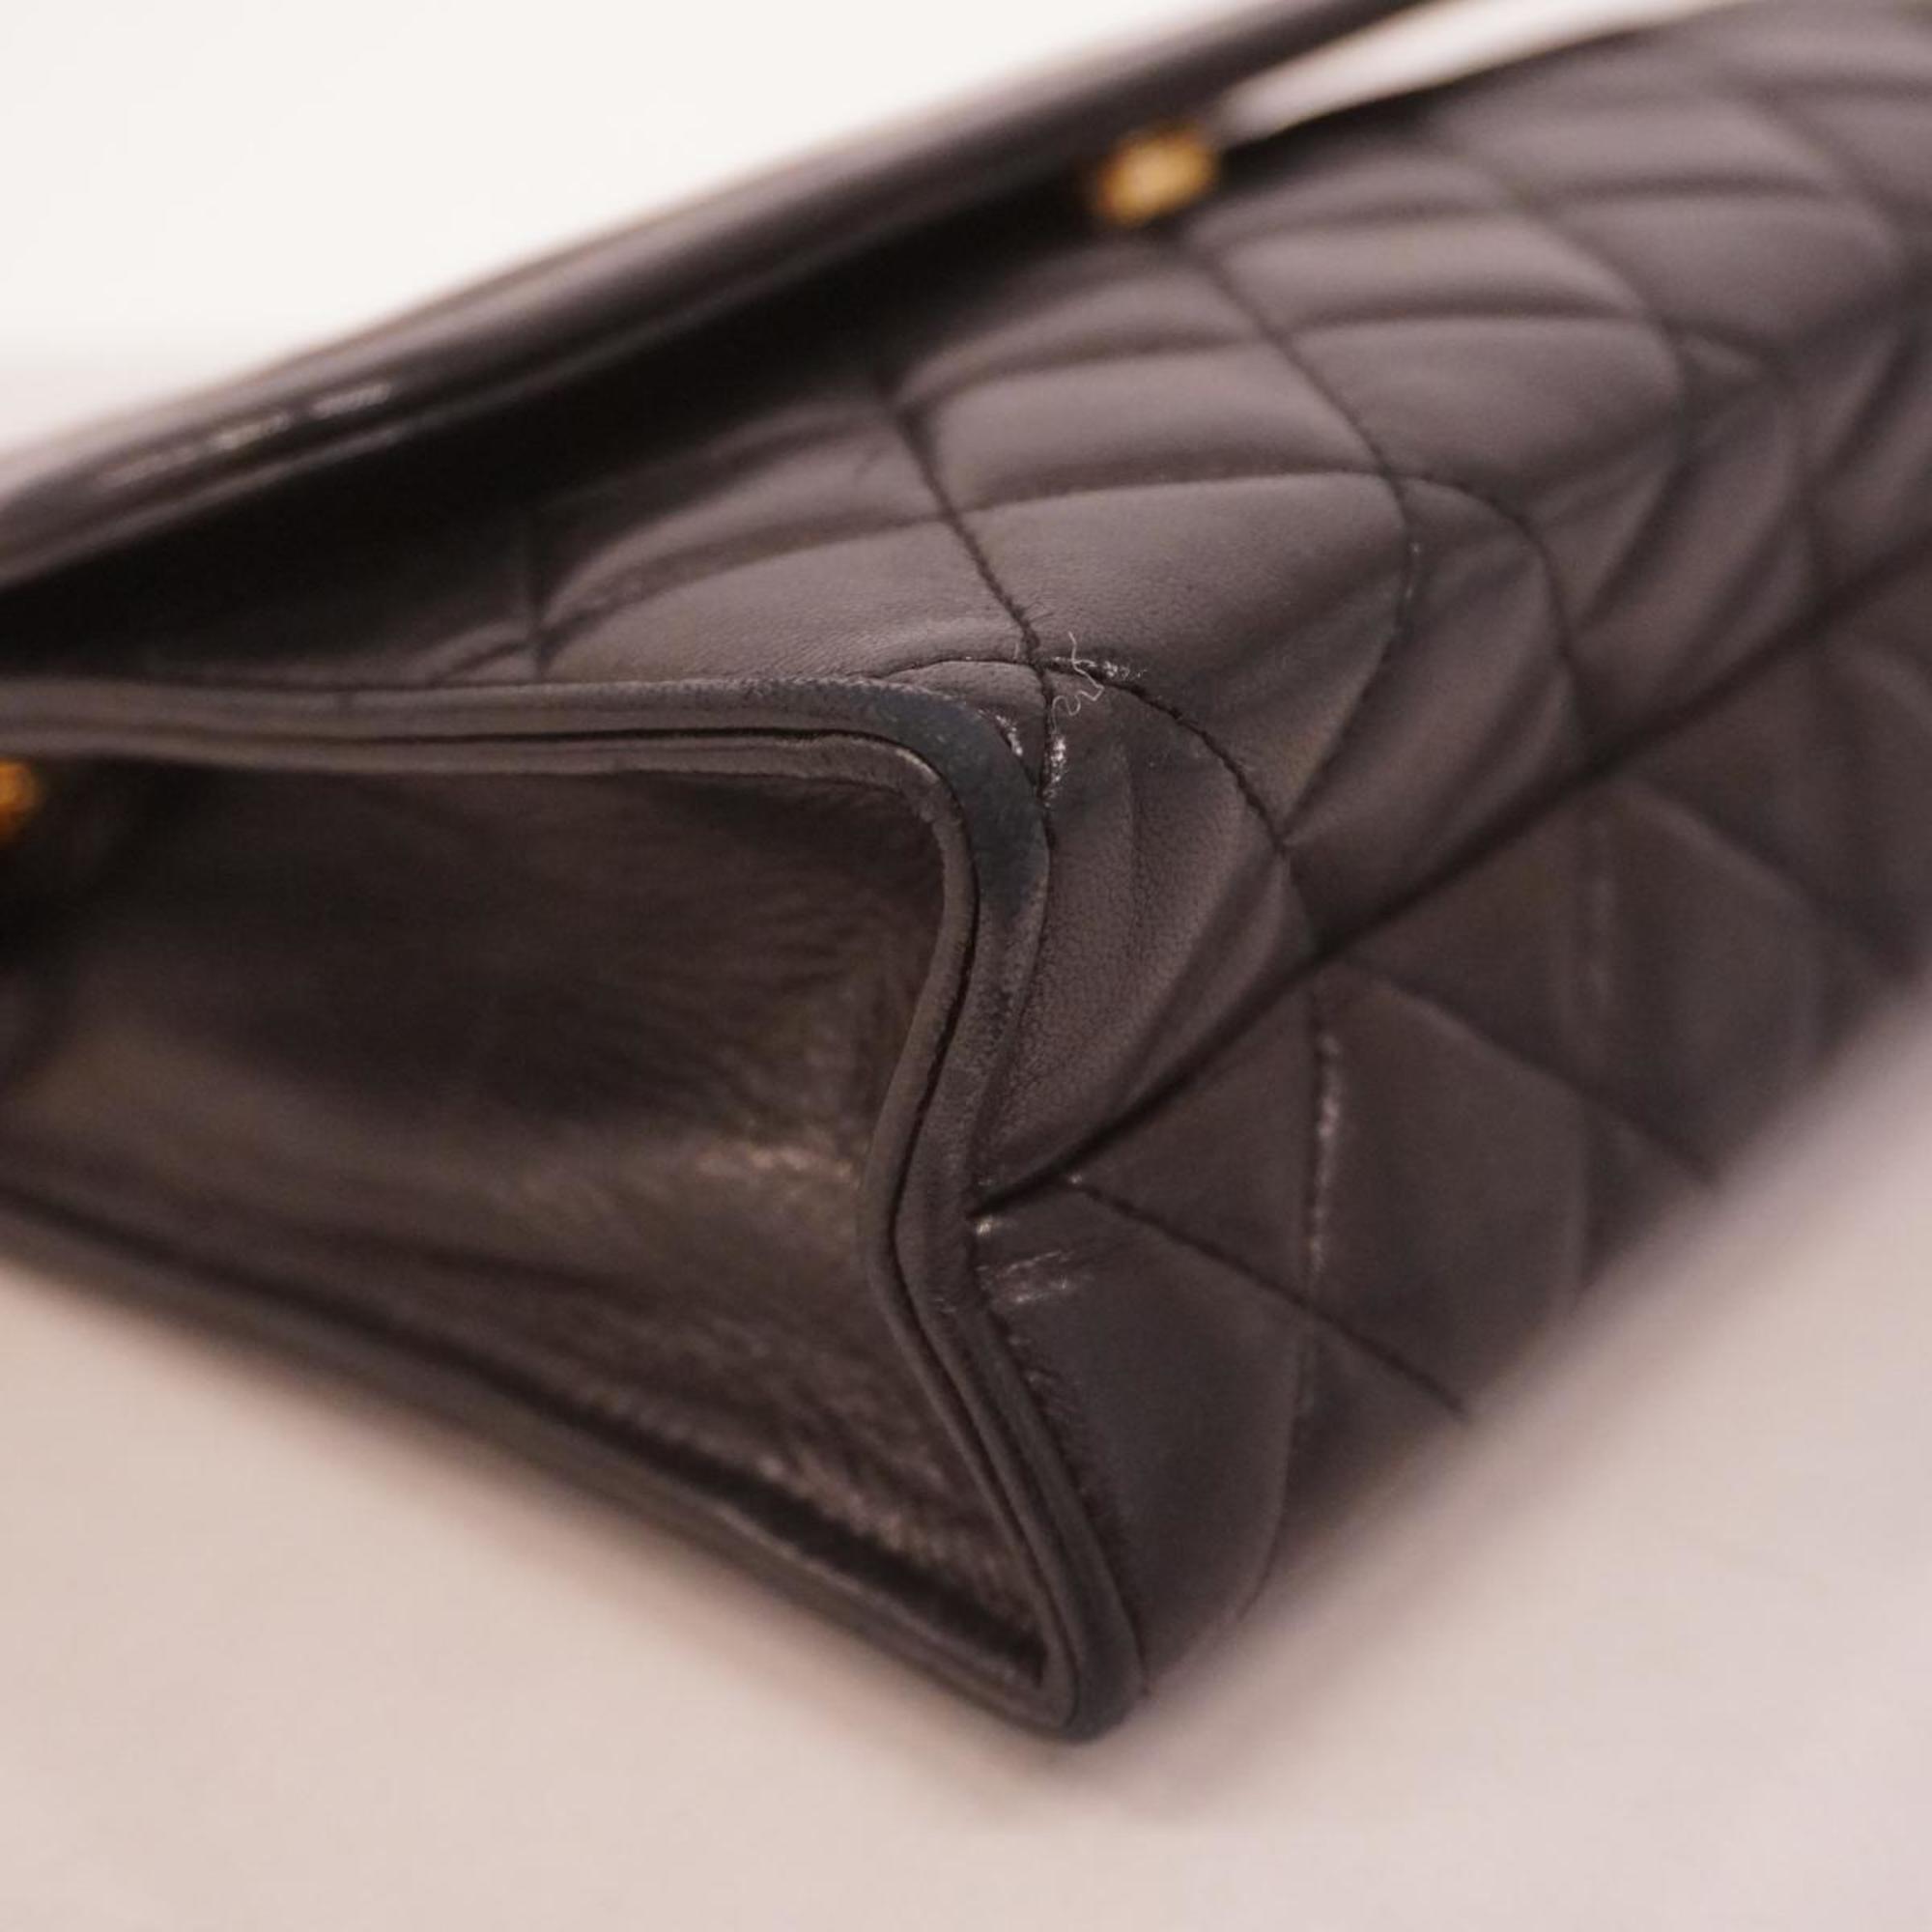 Chanel Shoulder Bag with Matelasse Chain Lambskin Black Women's